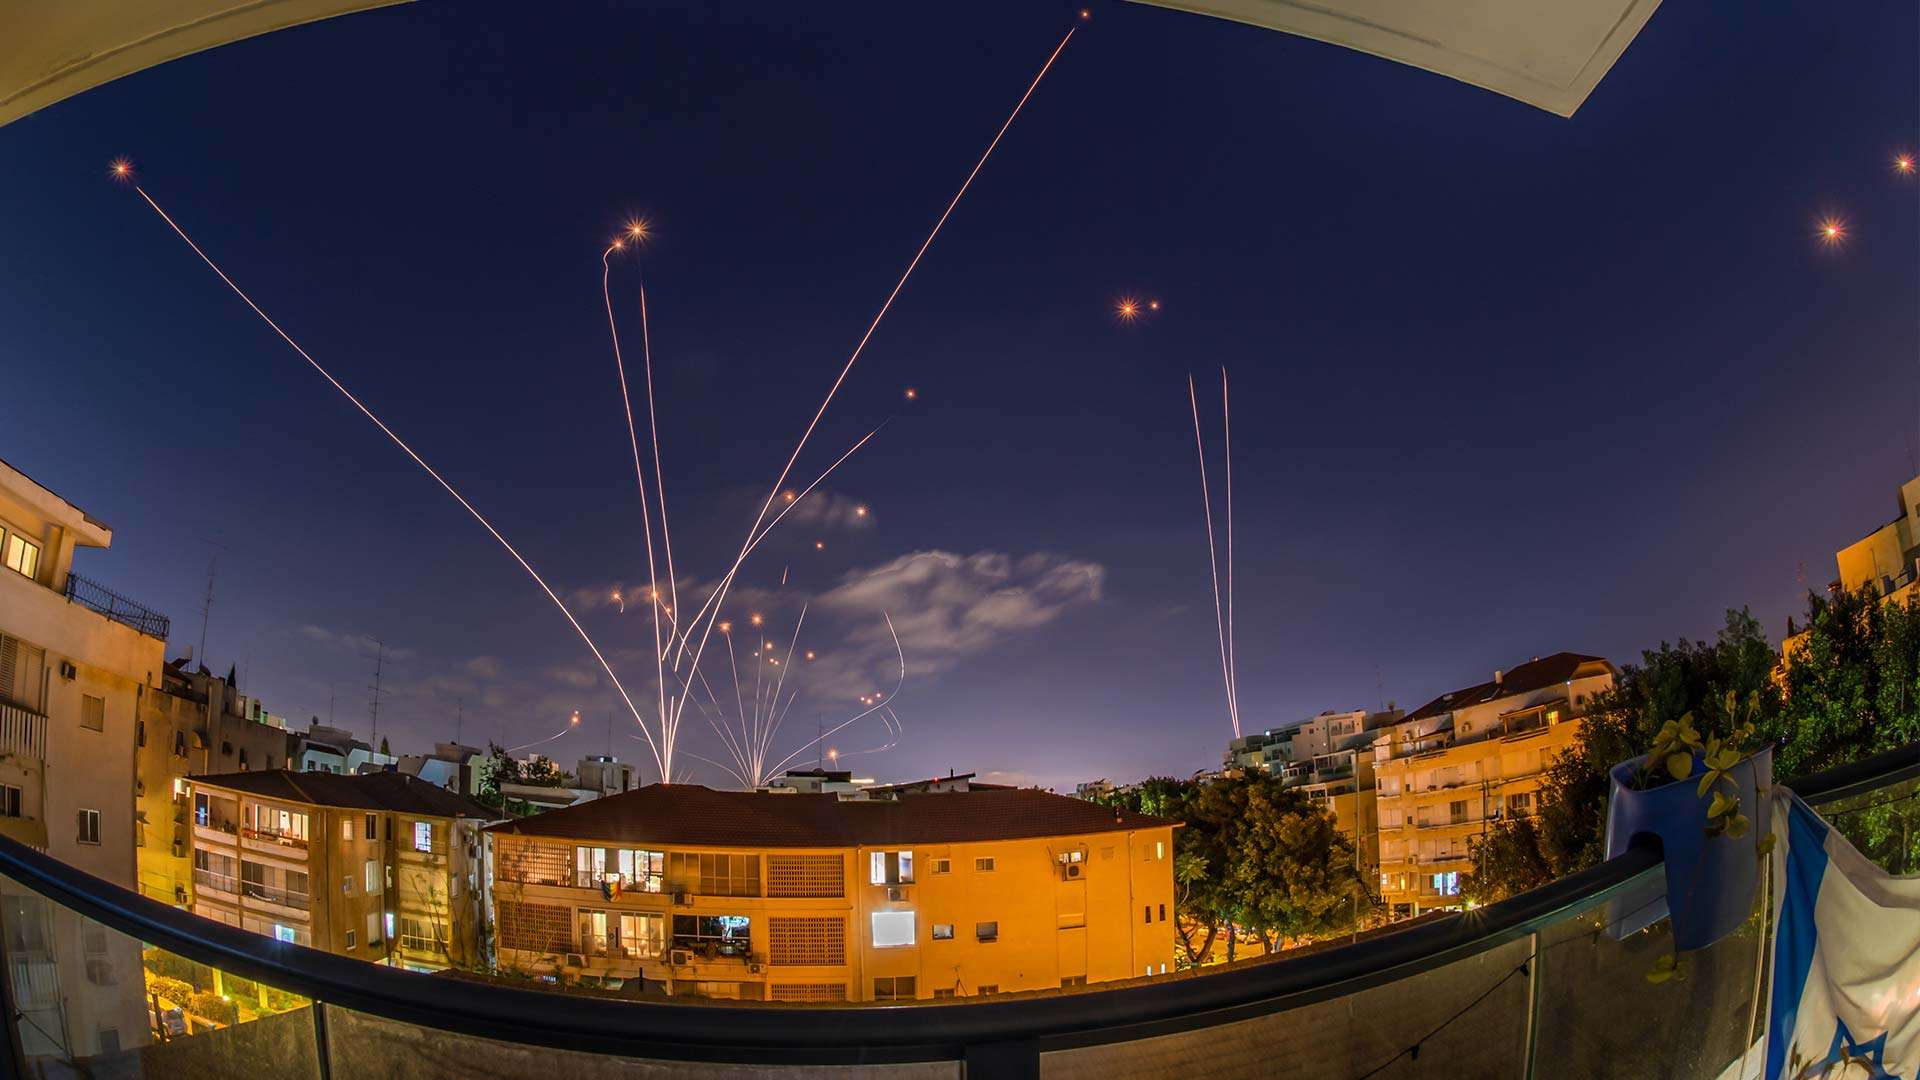 Iron Dome Rocket Interceptions of Hamas Rockets